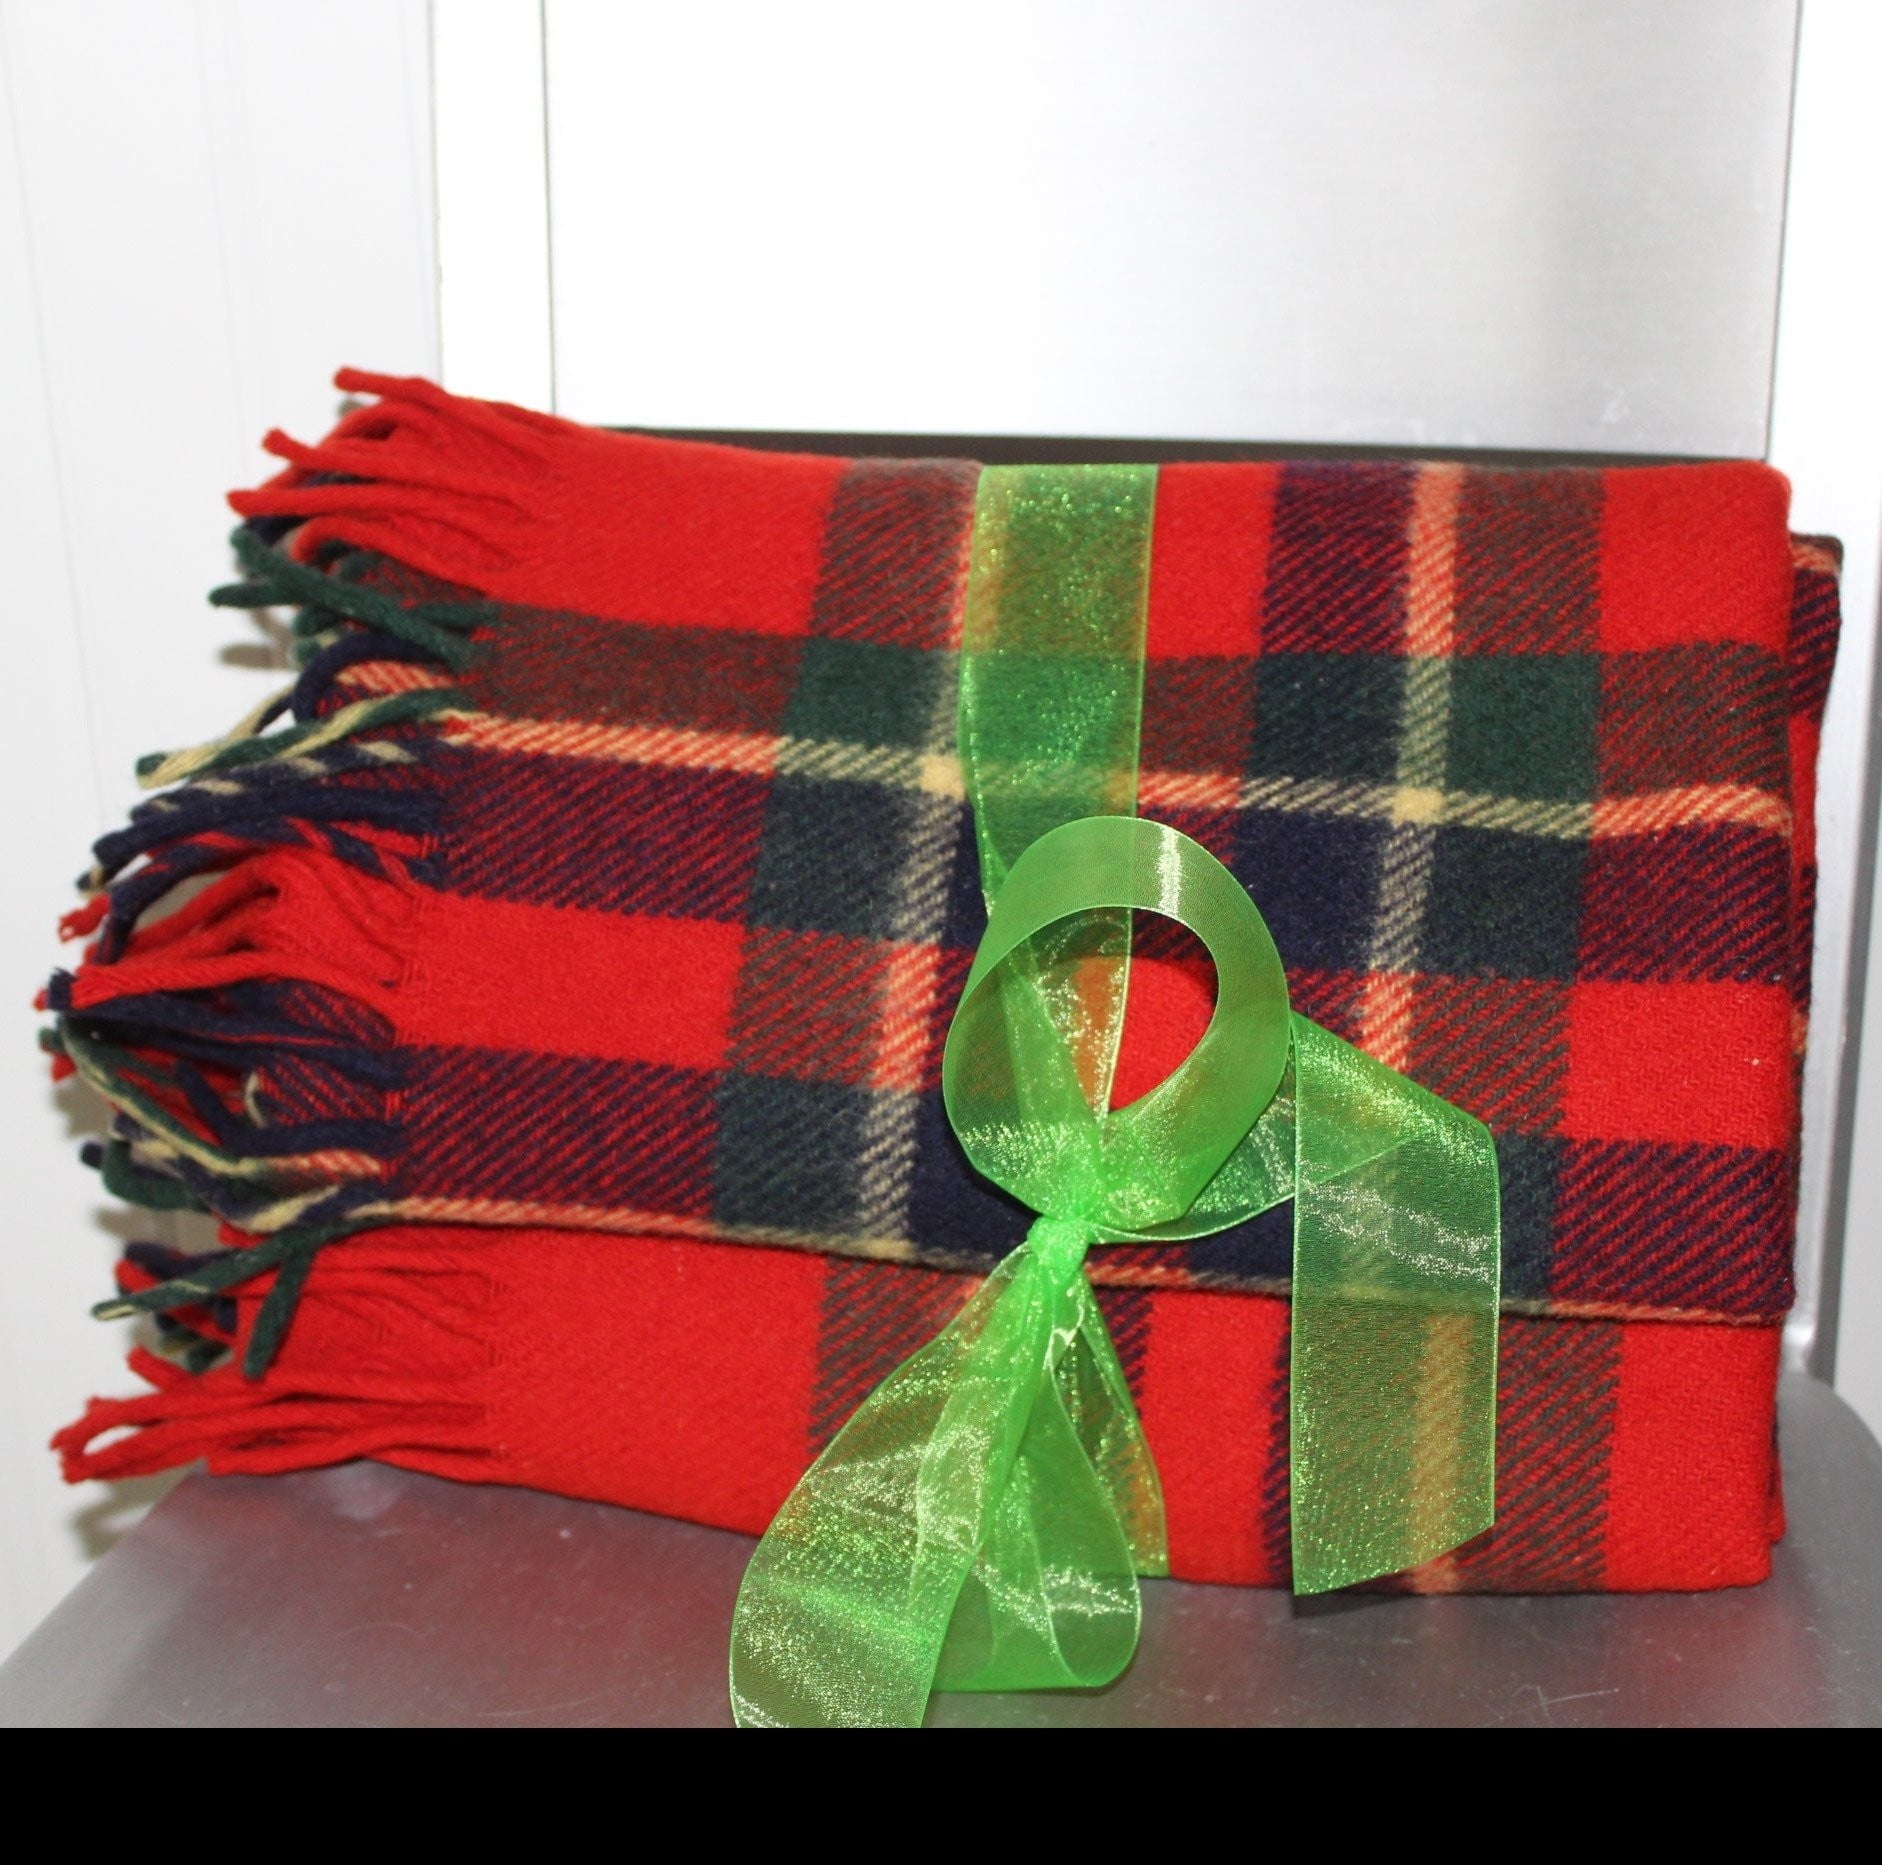 Troy Robe USA Wool Throw Blanket - Red Green Black Plaid - 48" x 50"